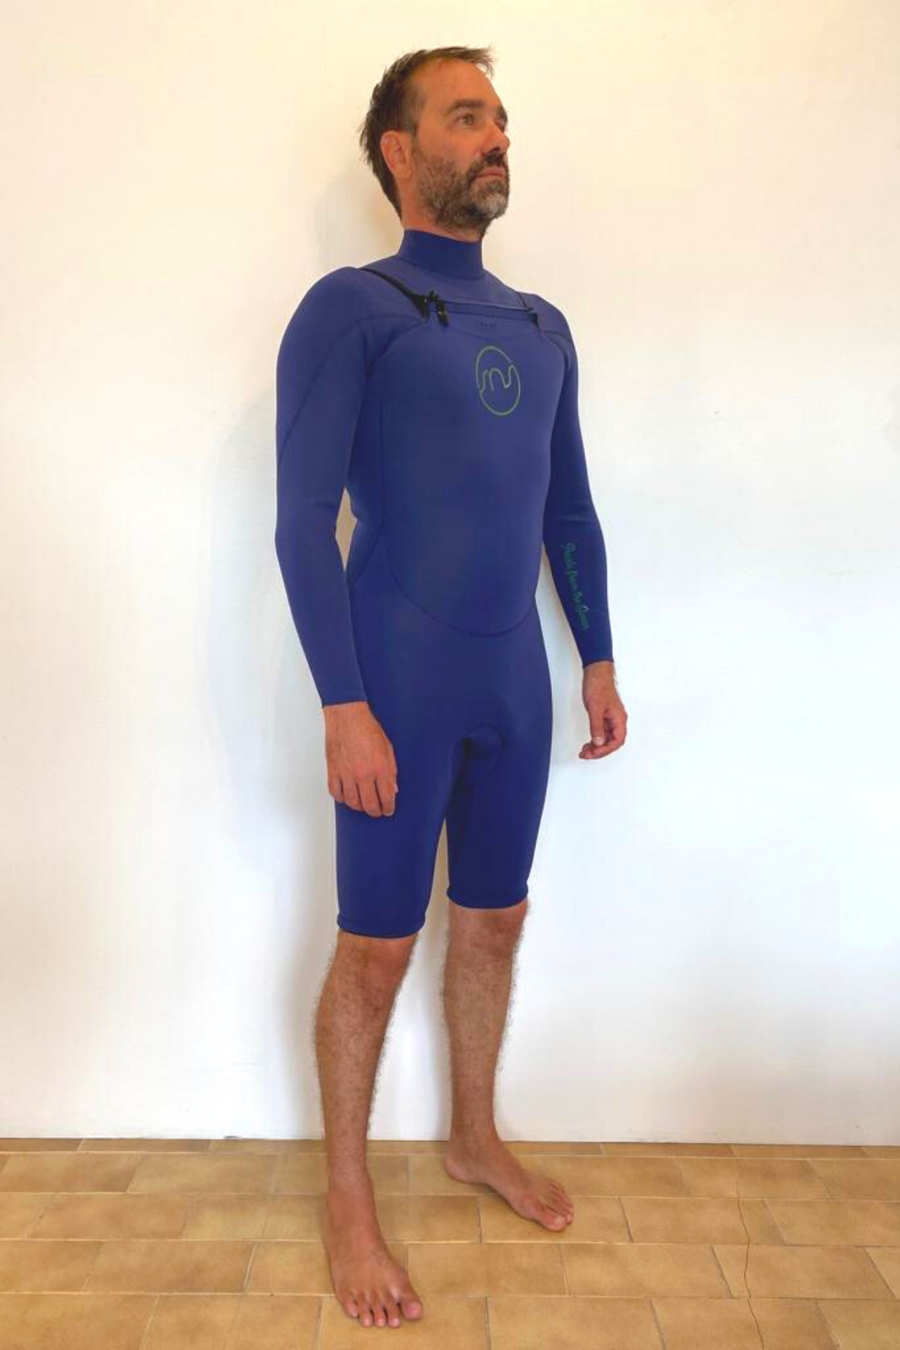 Yulex™ wetsuit | 2mm | Long sleeve shorty | Navy